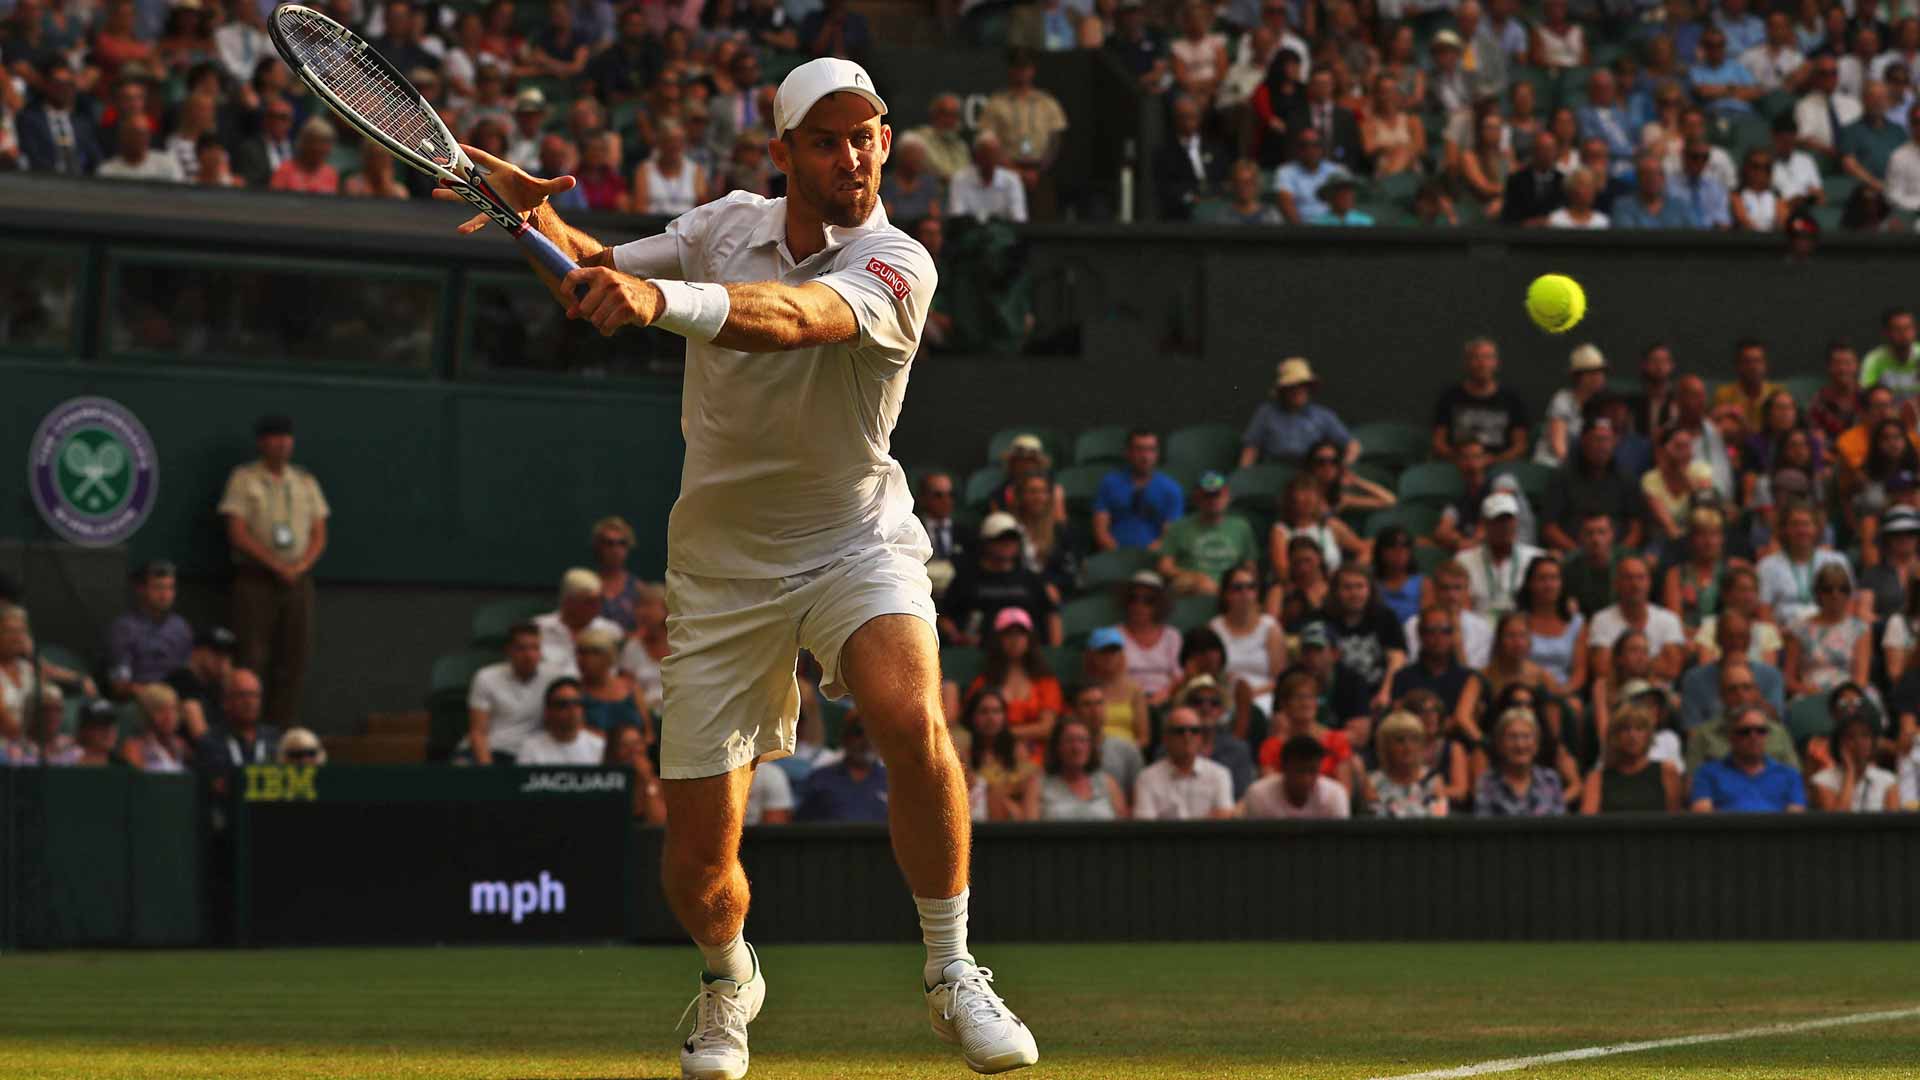 Bradley Klahn faces Kyle Edmund on Centre Court at Wimbledon in 2018.